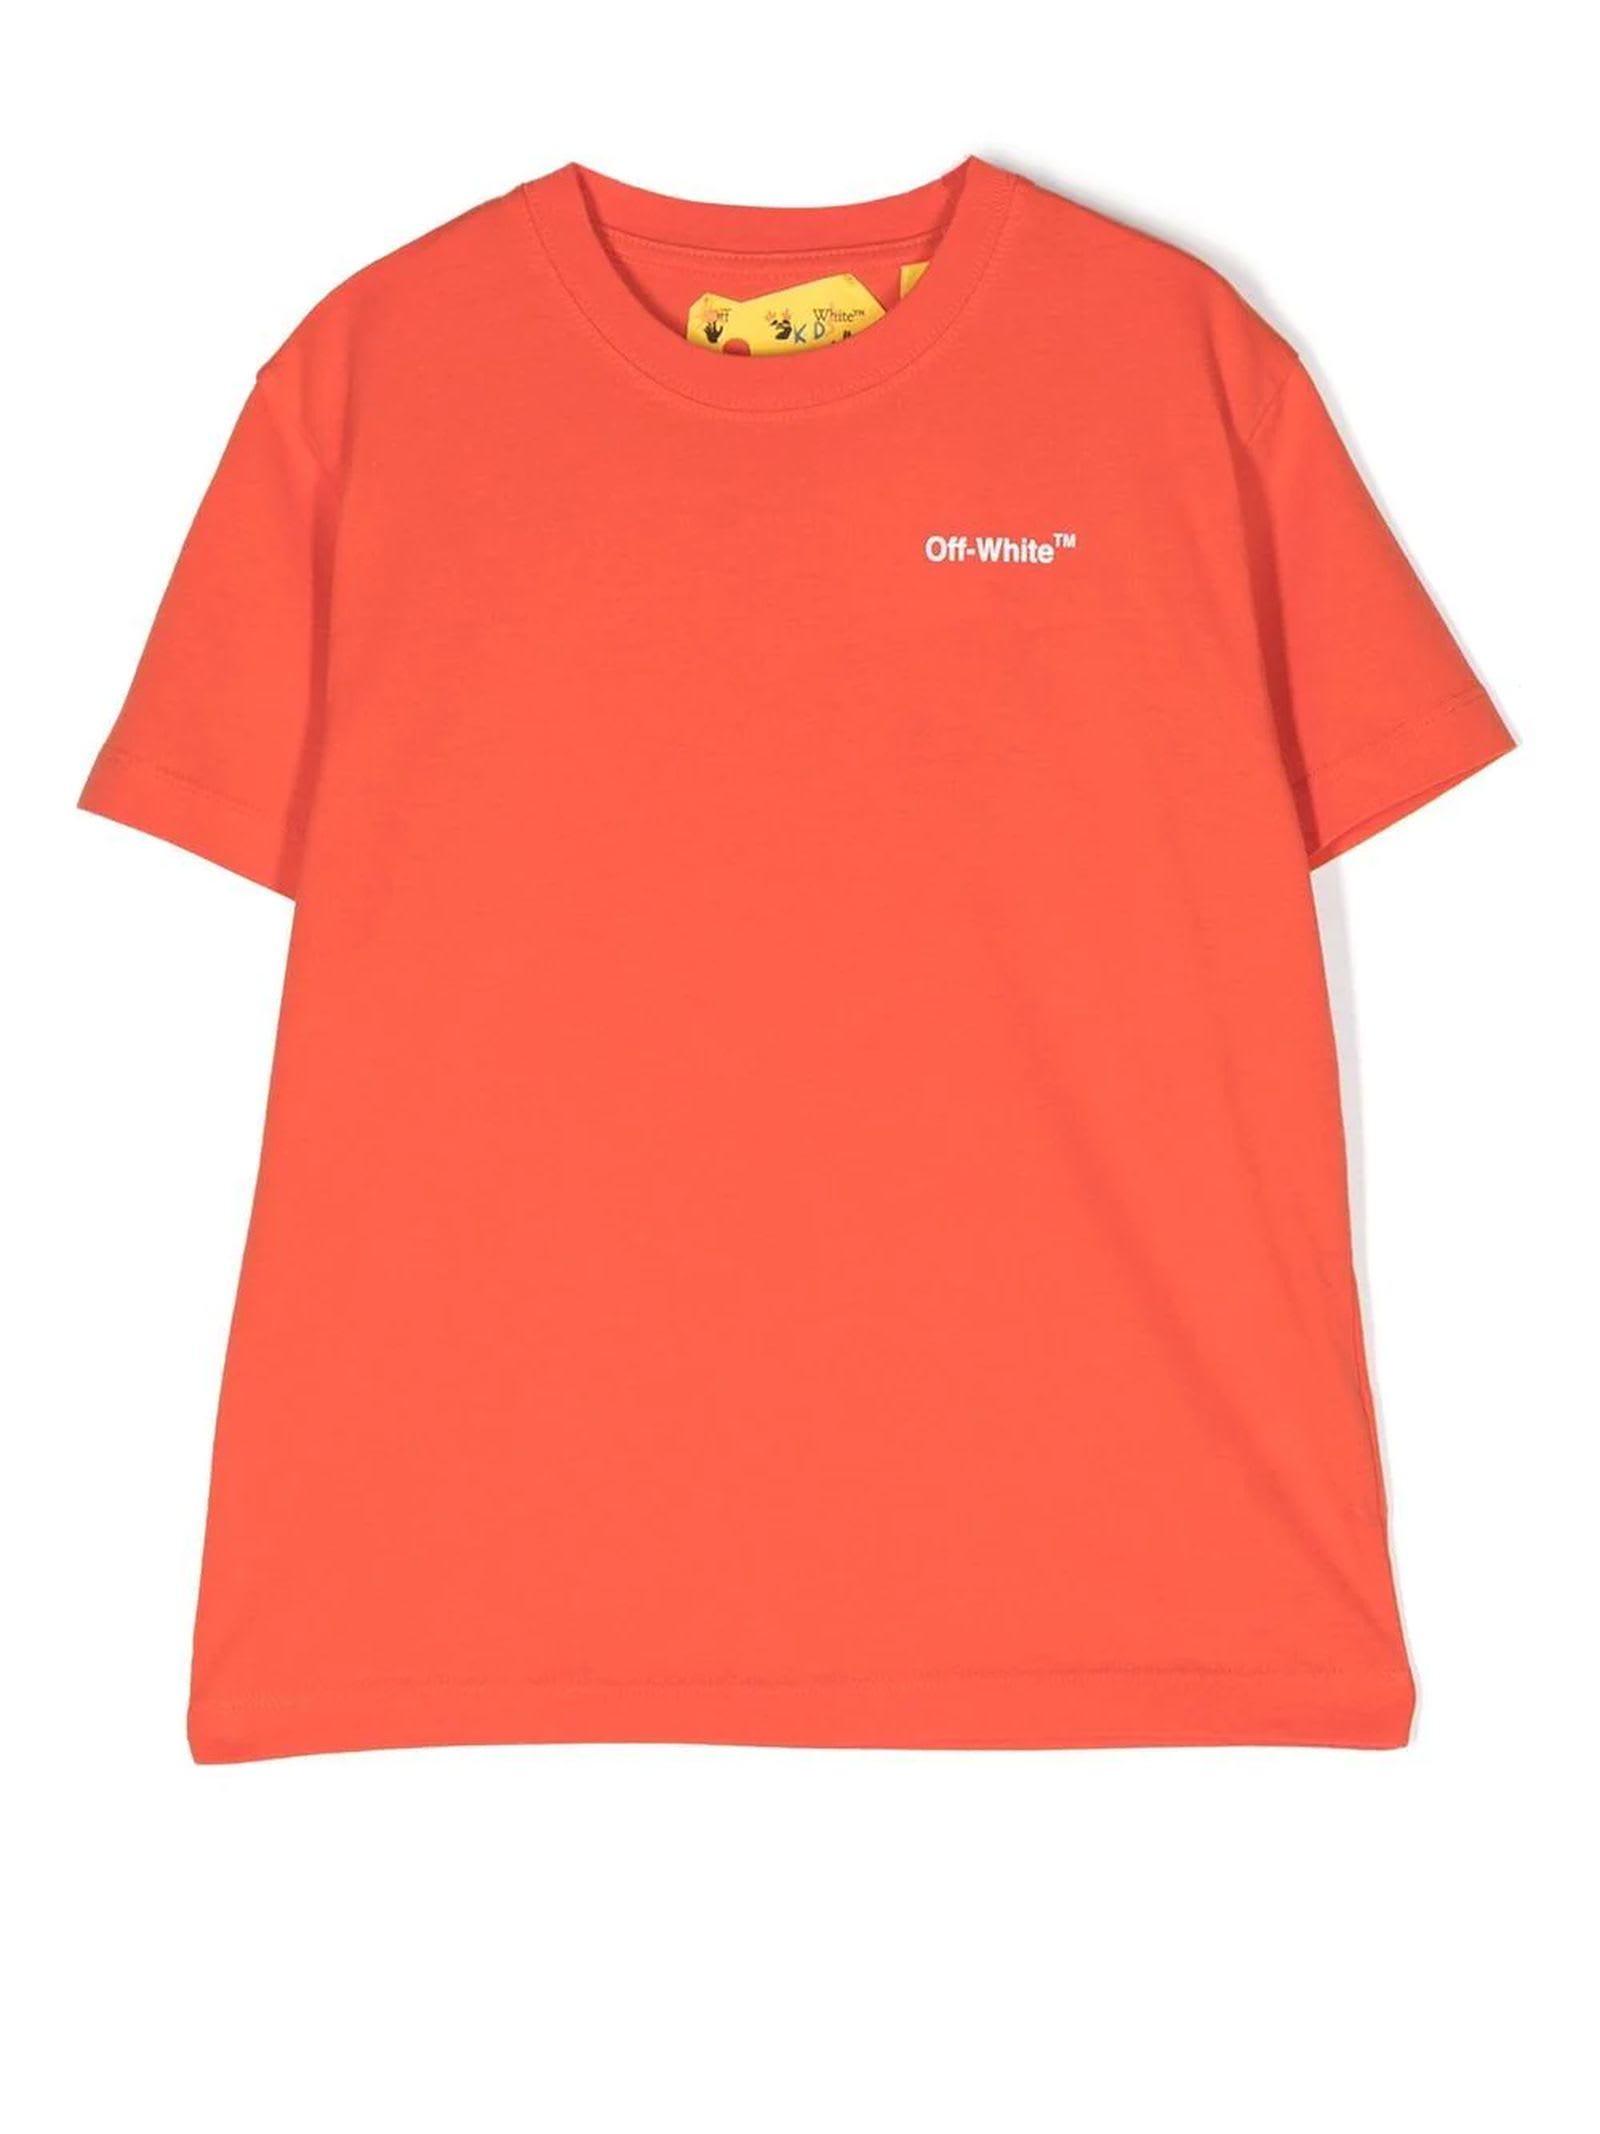 Off-White Orange Cotton T-shirt